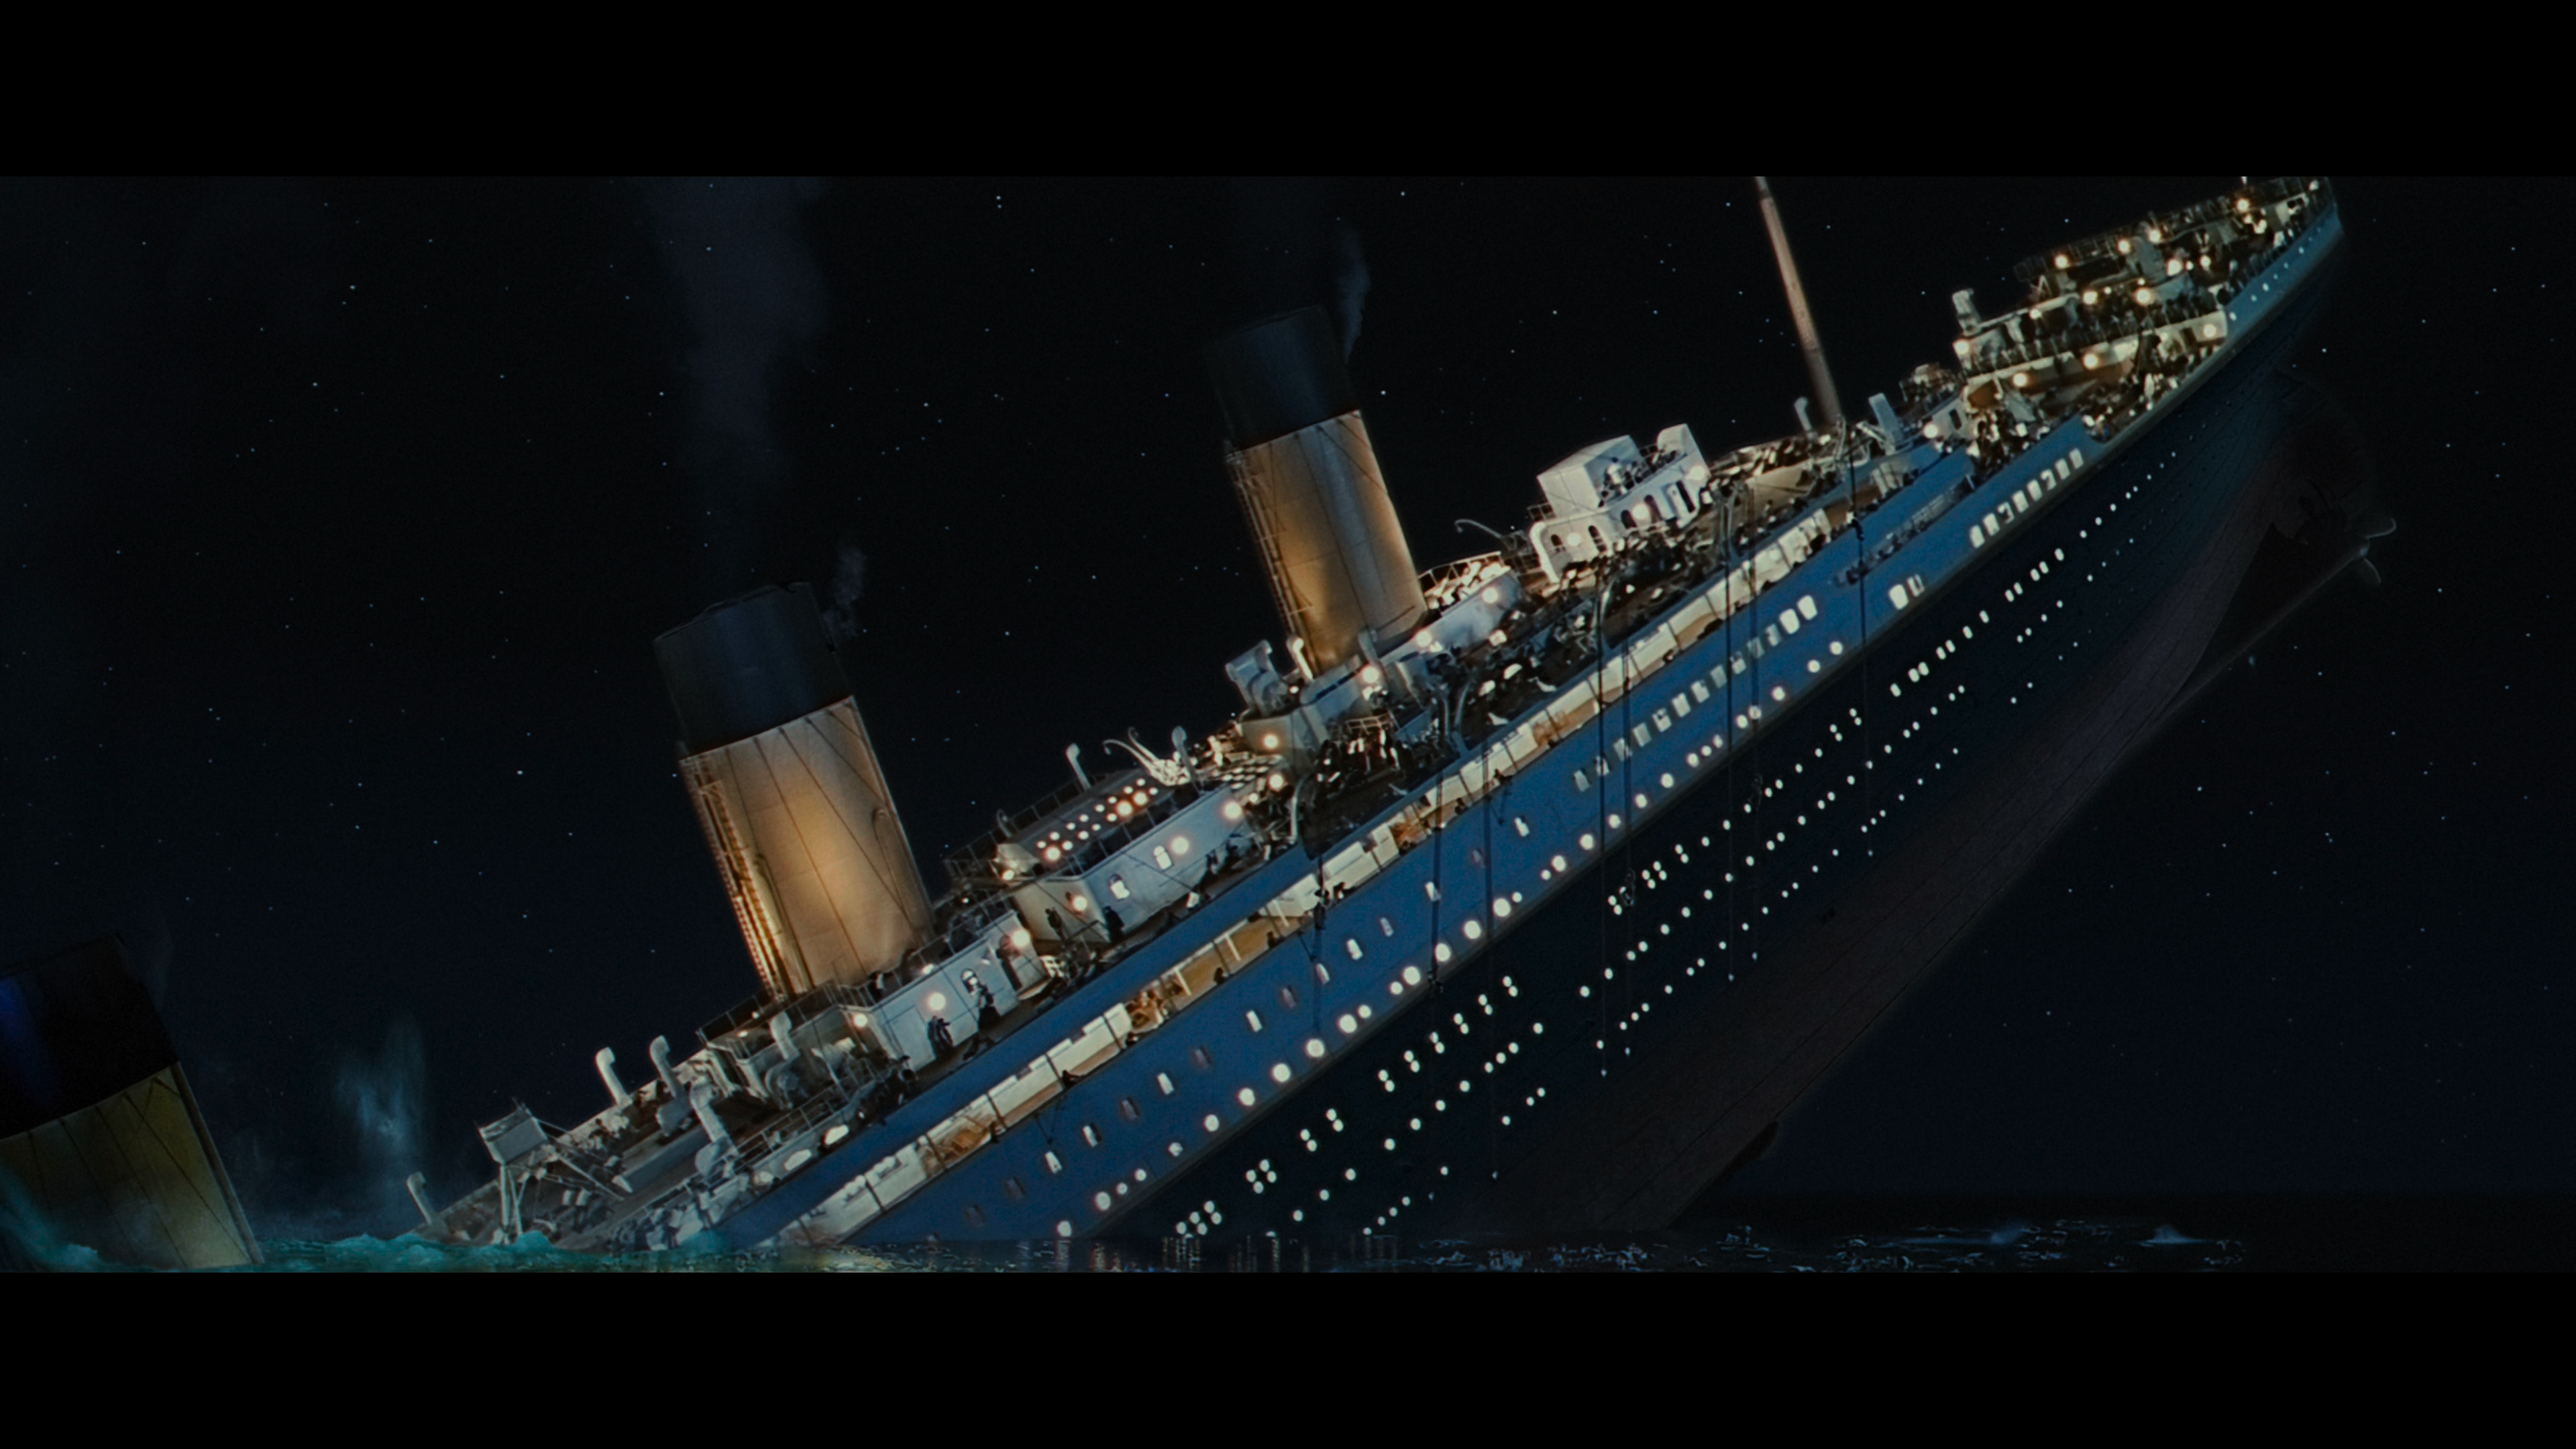 Titanic' making its maiden voyage on 4K Ultra HD, Blu-ray on December 5